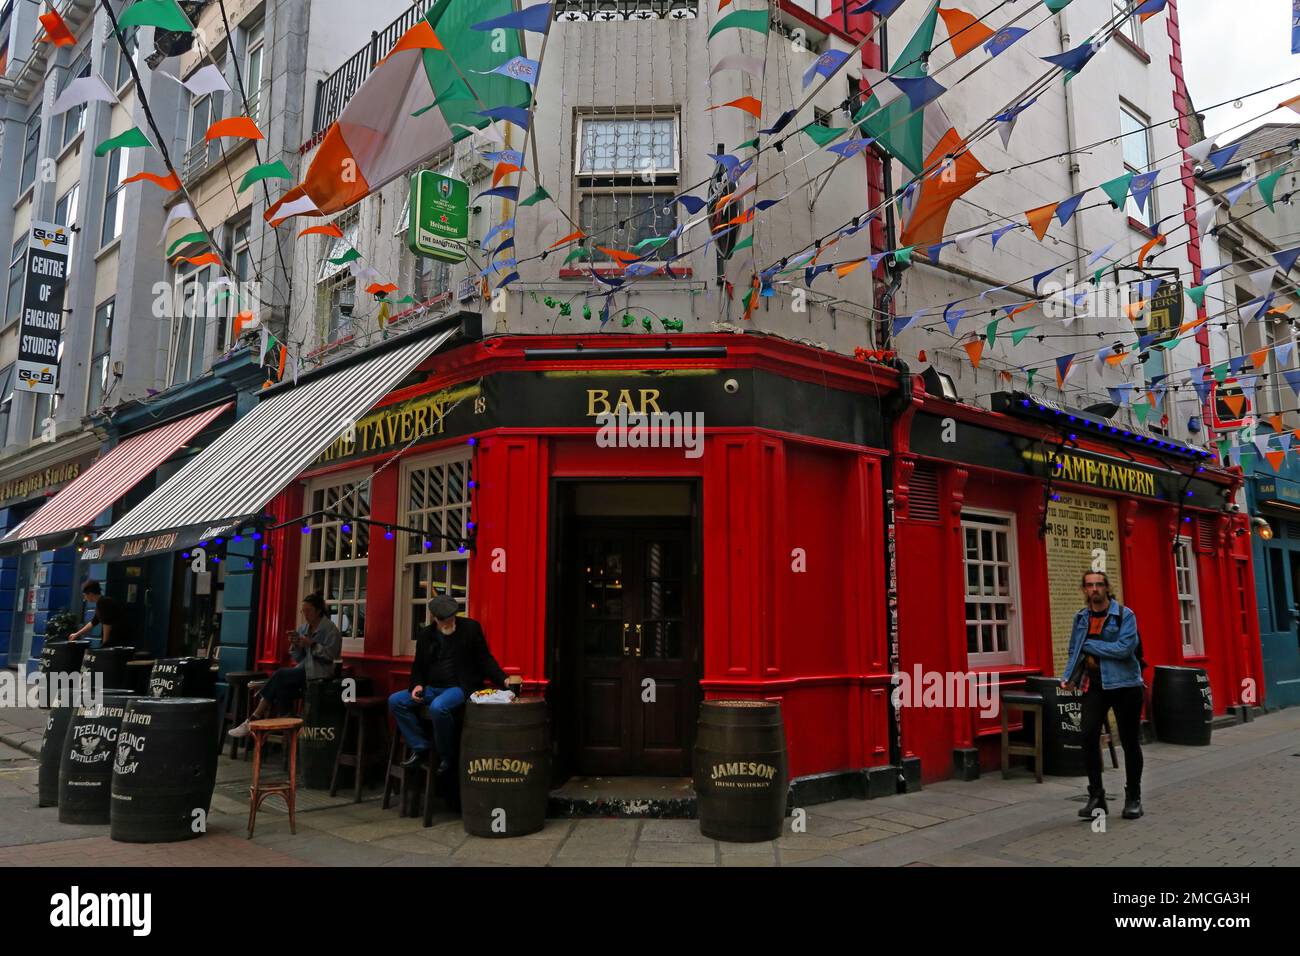 Dame Tavern, Irish Republican proclamation , 18 Dame Ct, Dublin 2, D02 W683, Eire, Ireland Stock Photo